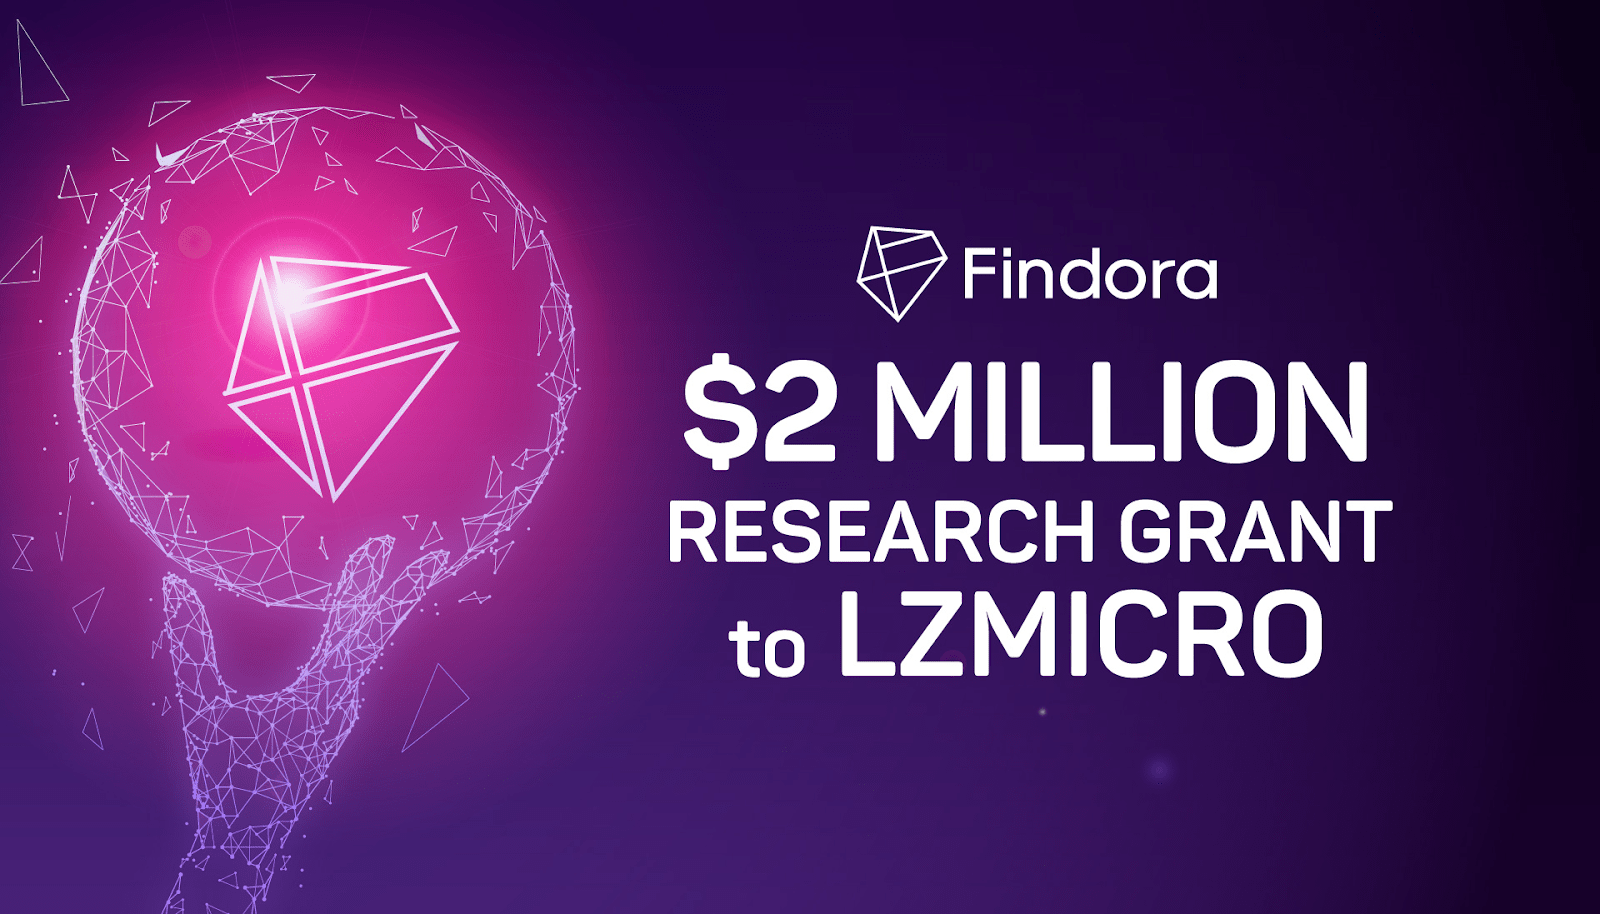 FINDORA Research Foundation Grants 2 Million to LZMicro